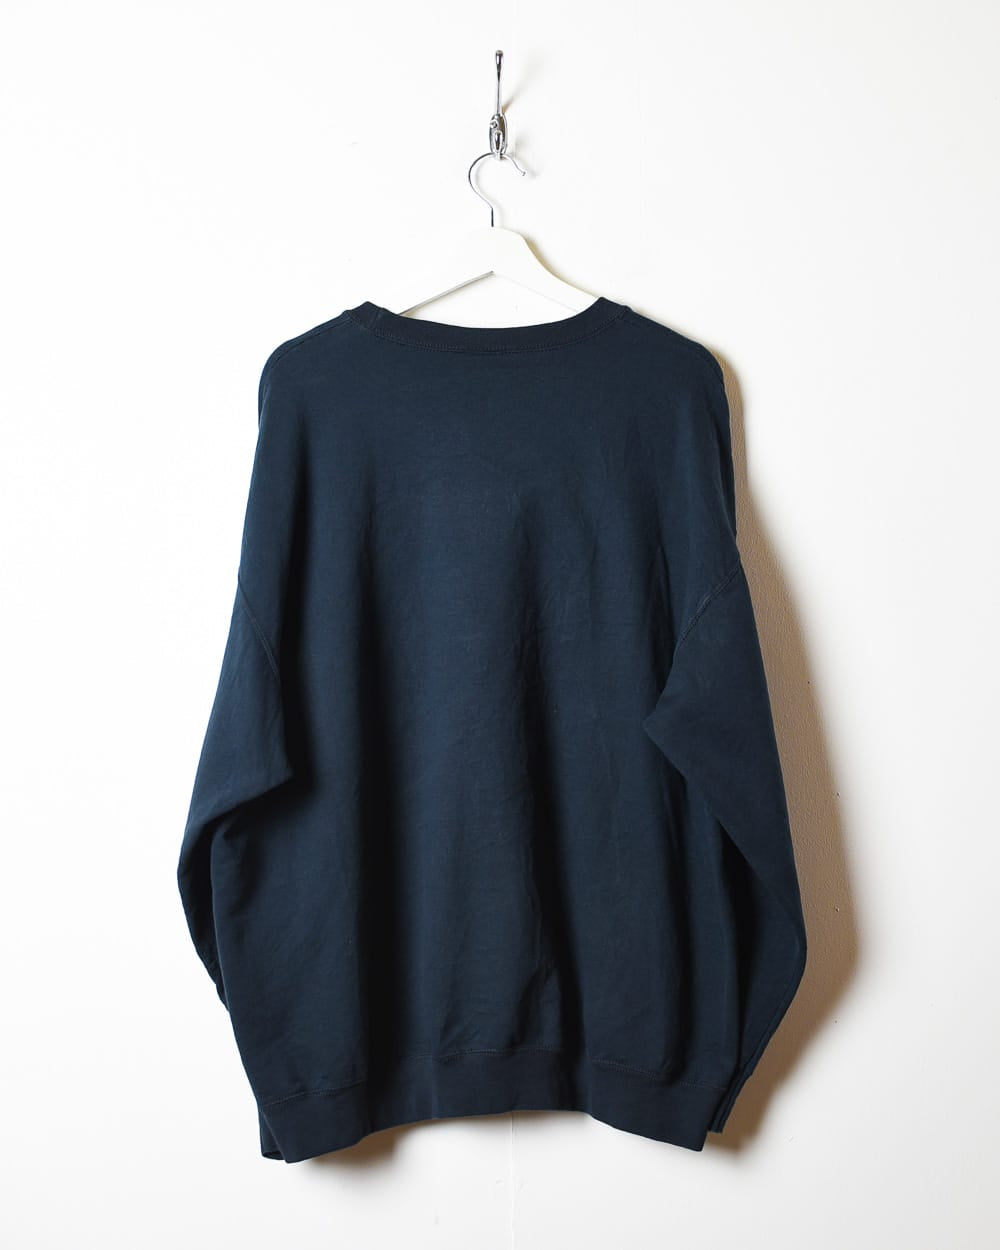 Black New York Sweatshirt - XX-Large